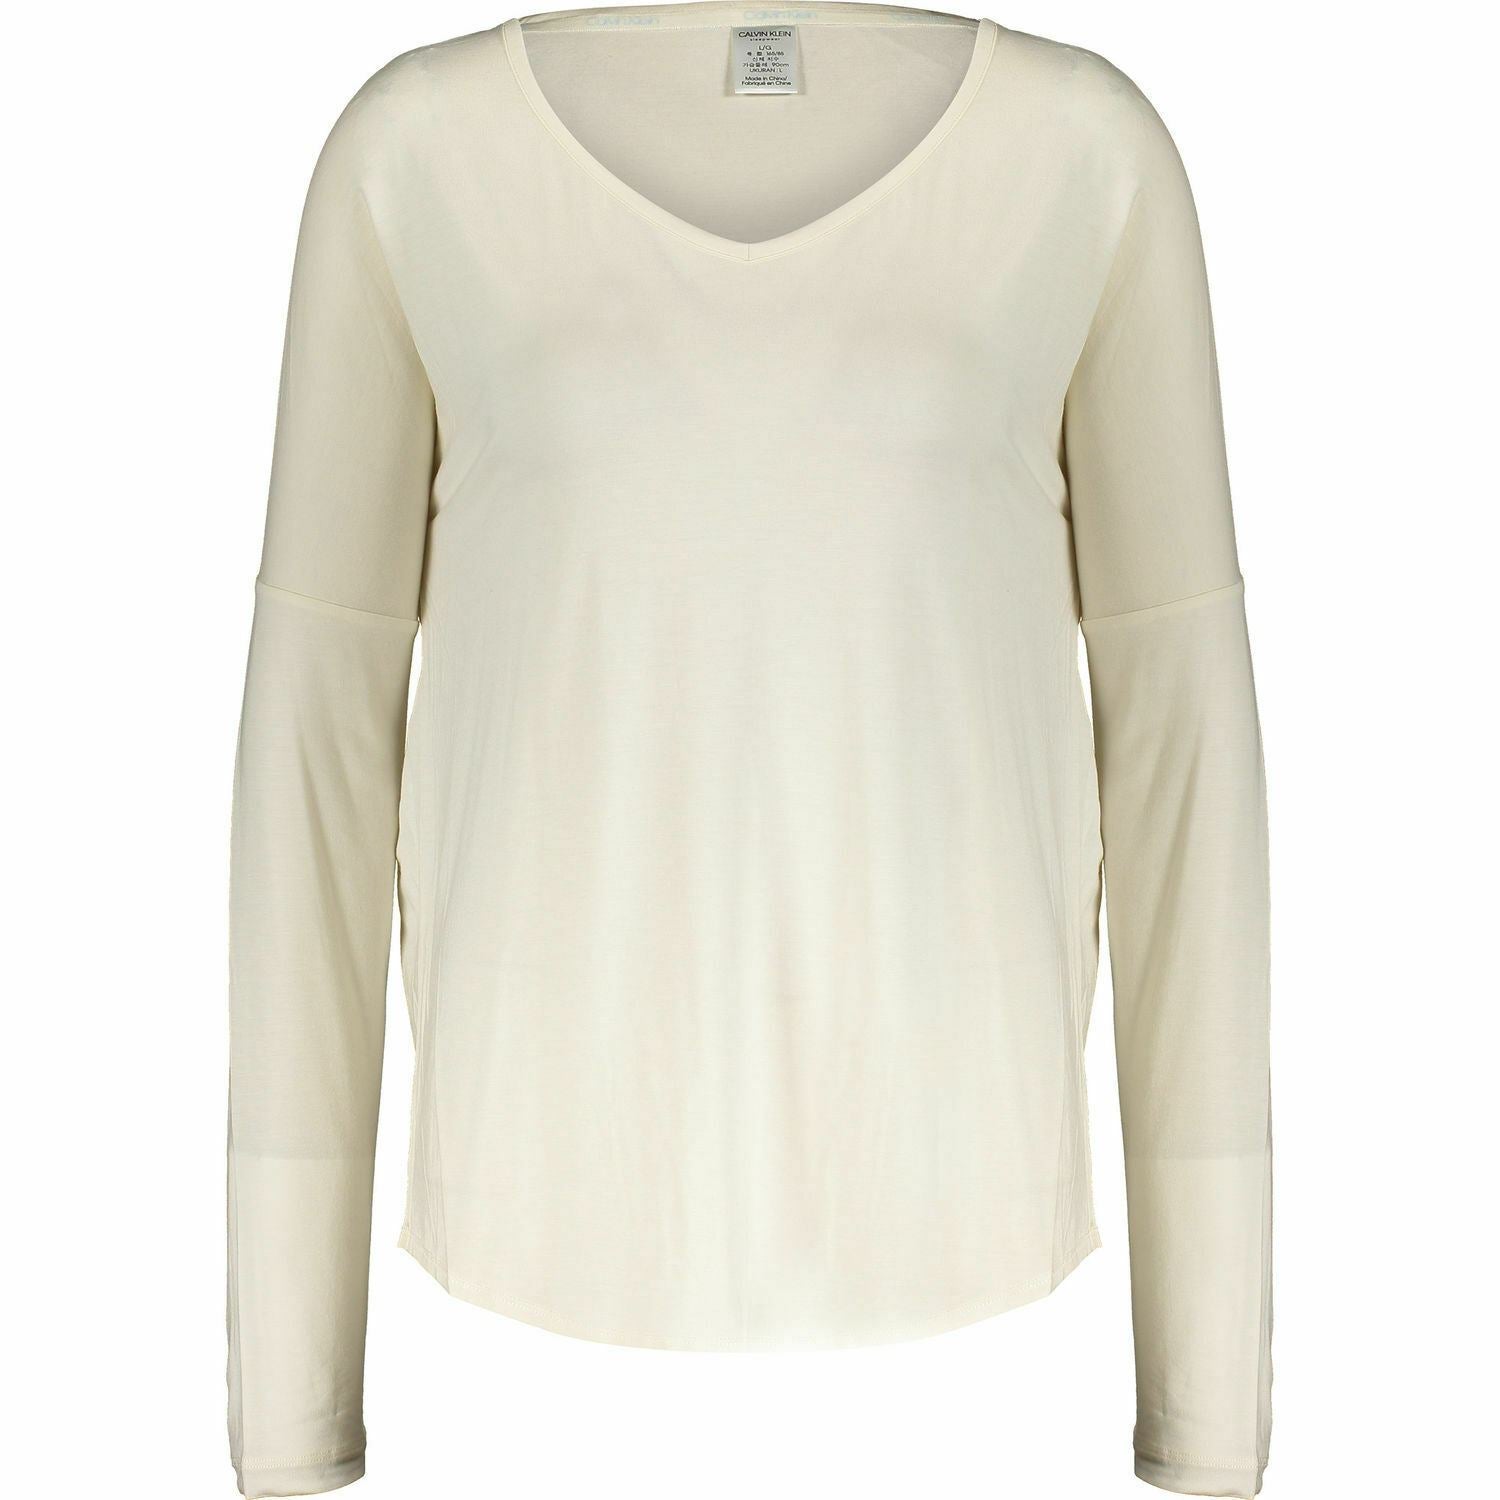 CALVIN KLEIN Sleepwear - Women's Long Sleeve Lounging/Pyjama Top, Cream, size M